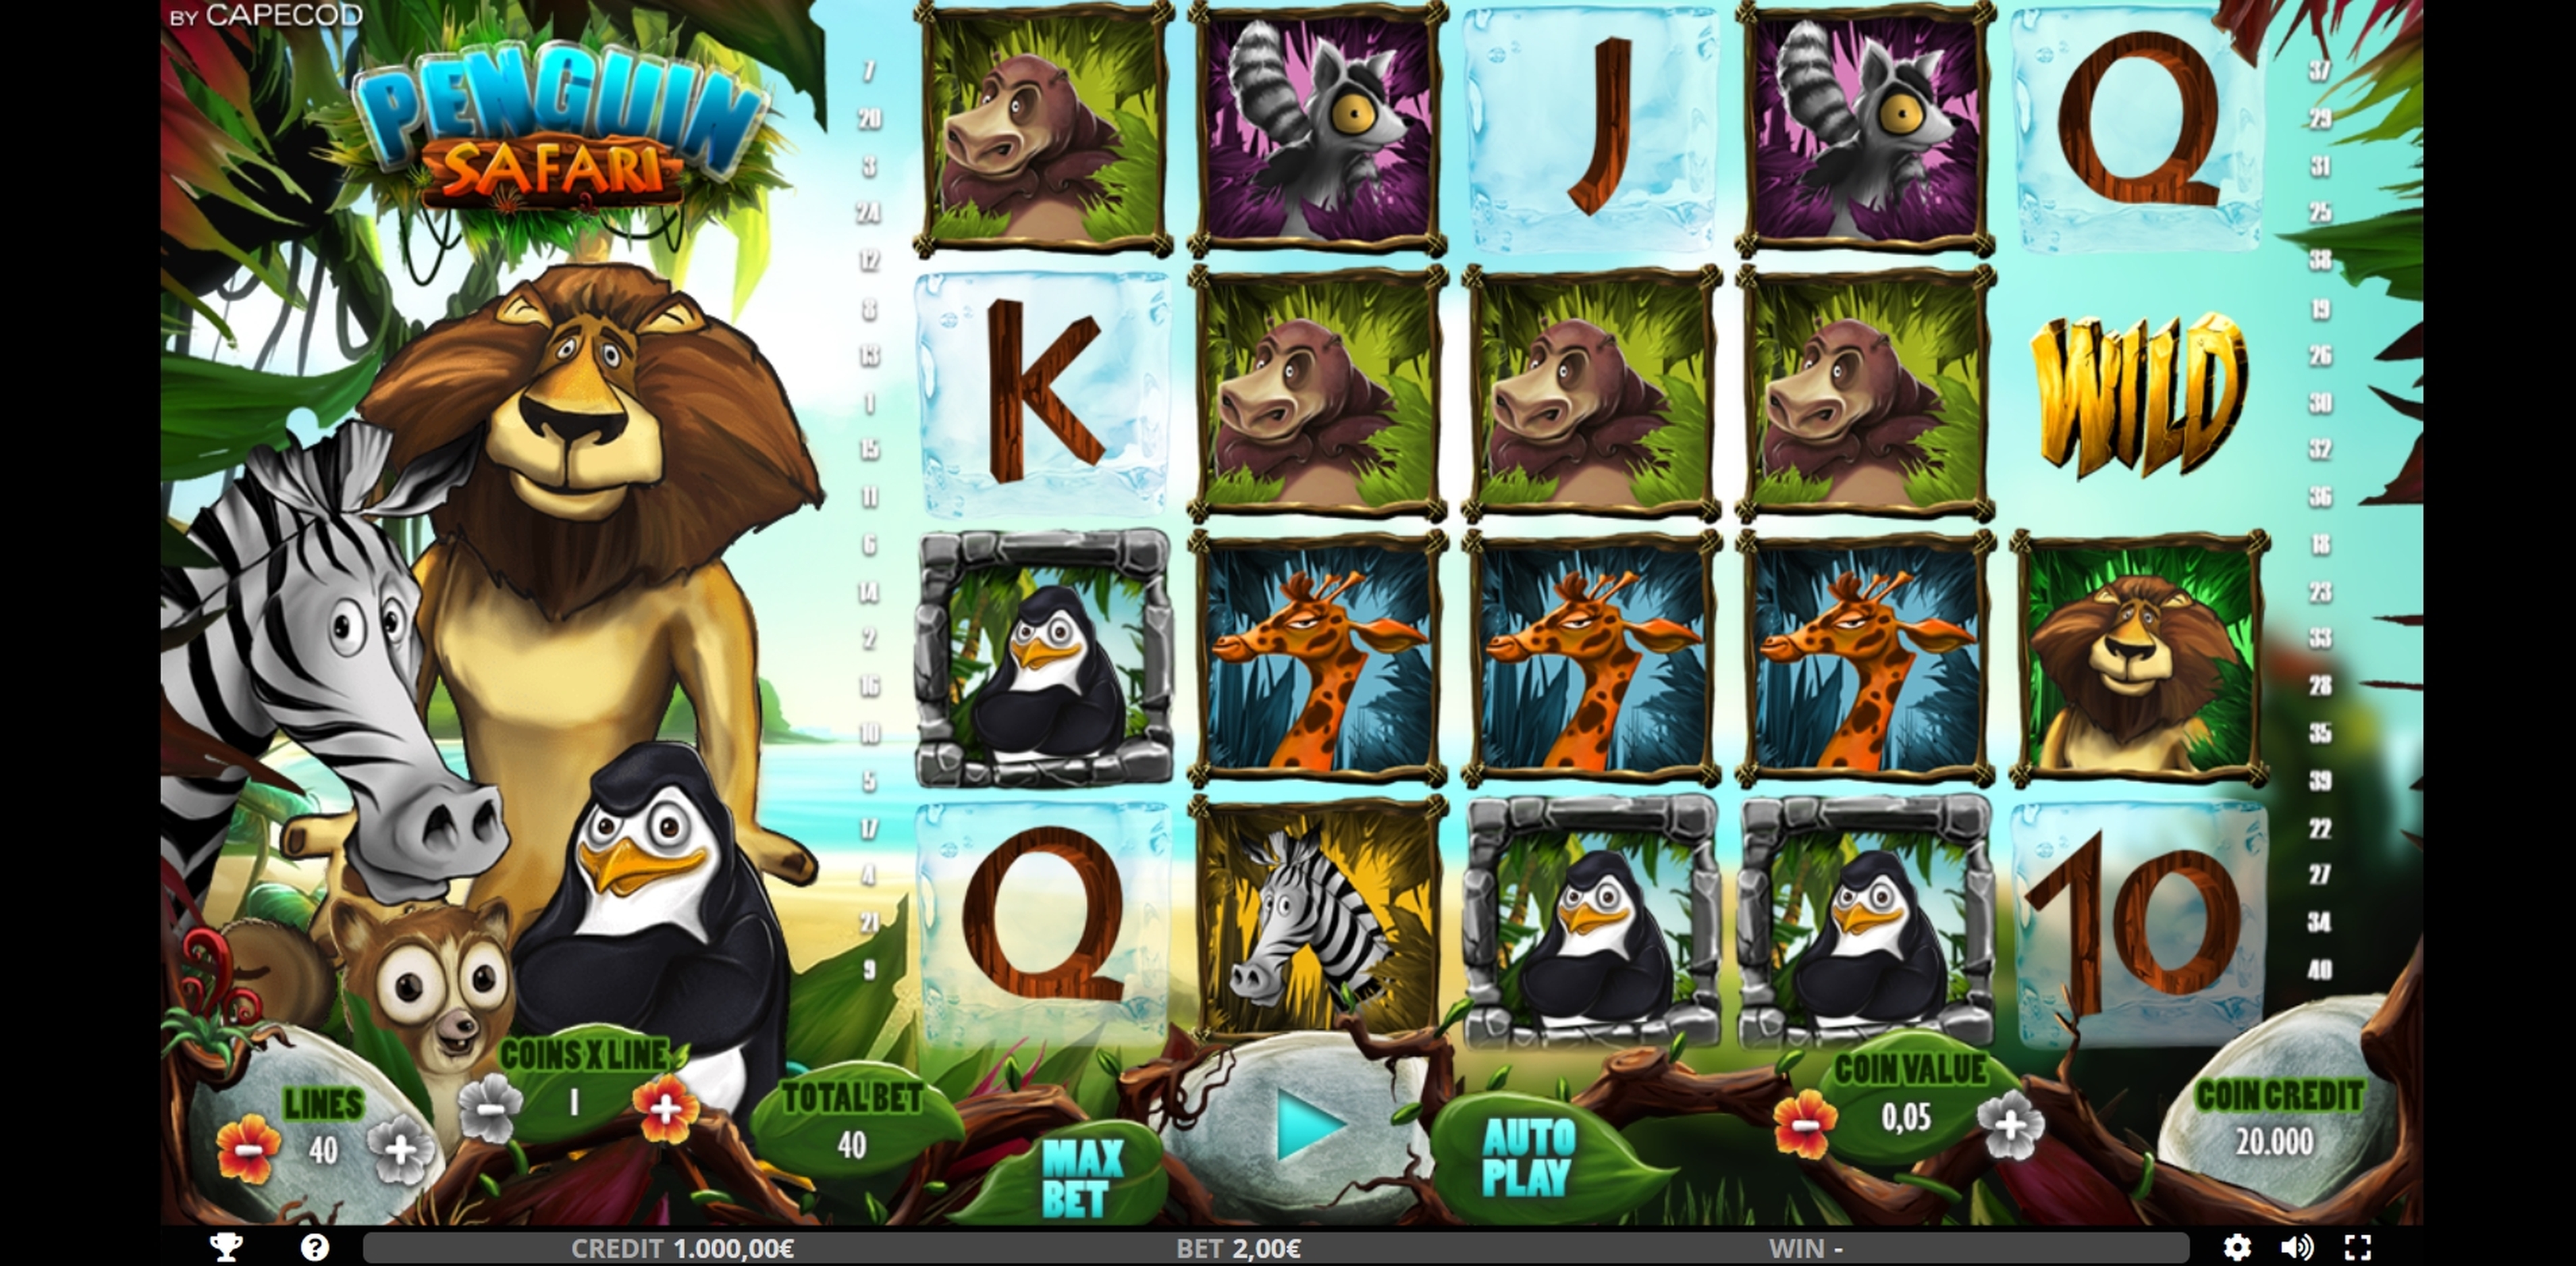 Reels in Penguin Safari Slot Game by Capecod Gaming